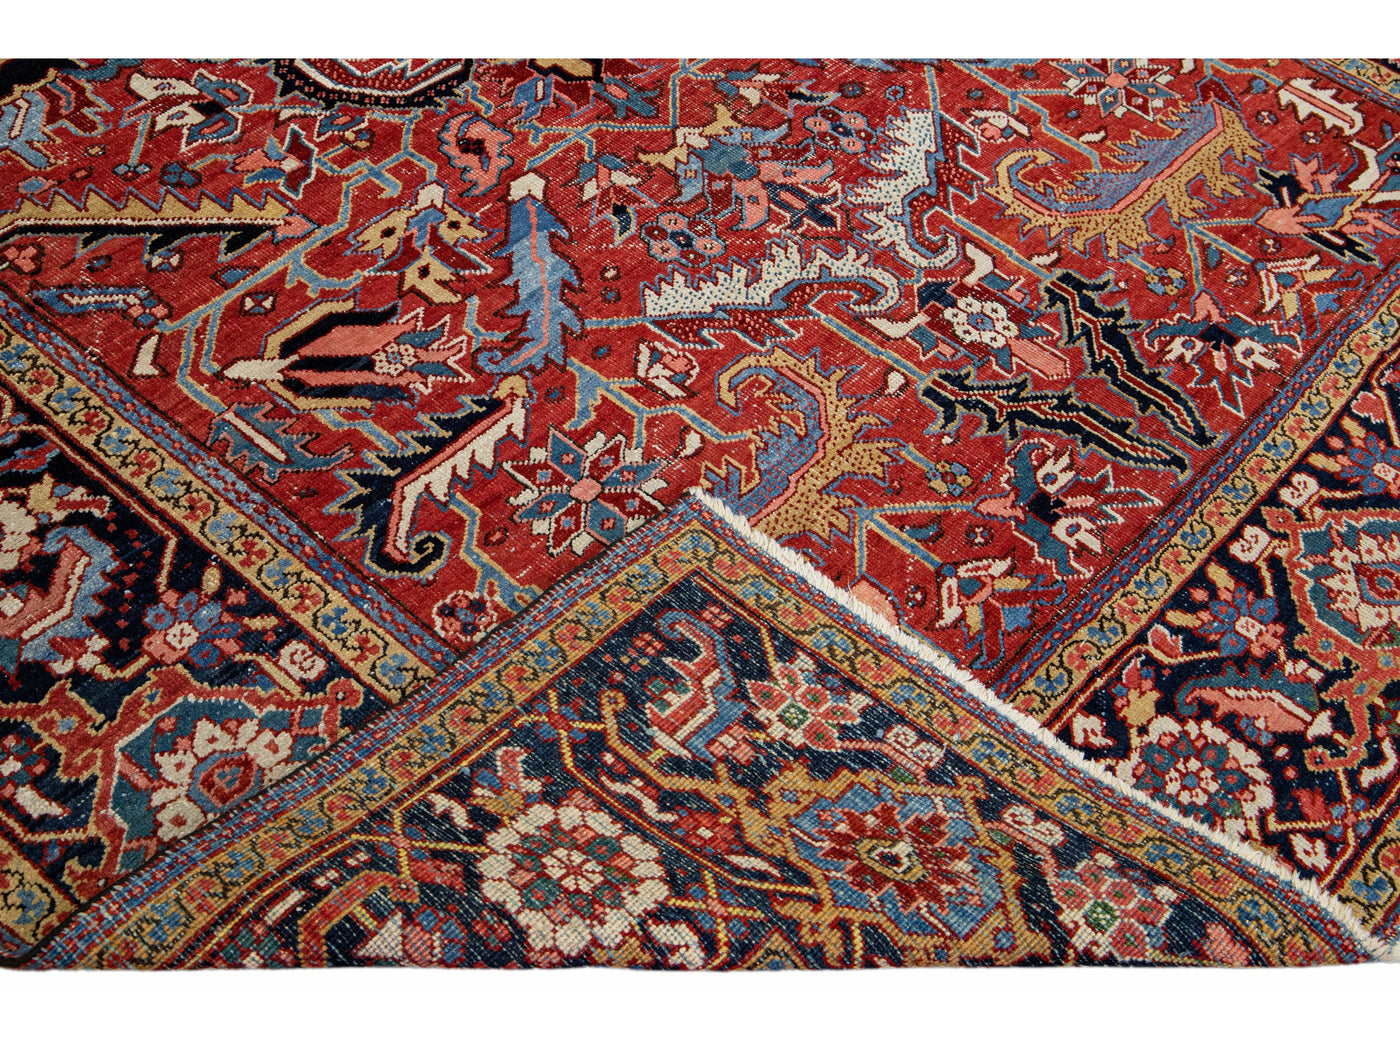 Antique Persian Heriz Handmade Allover Designed Red Wool Rug